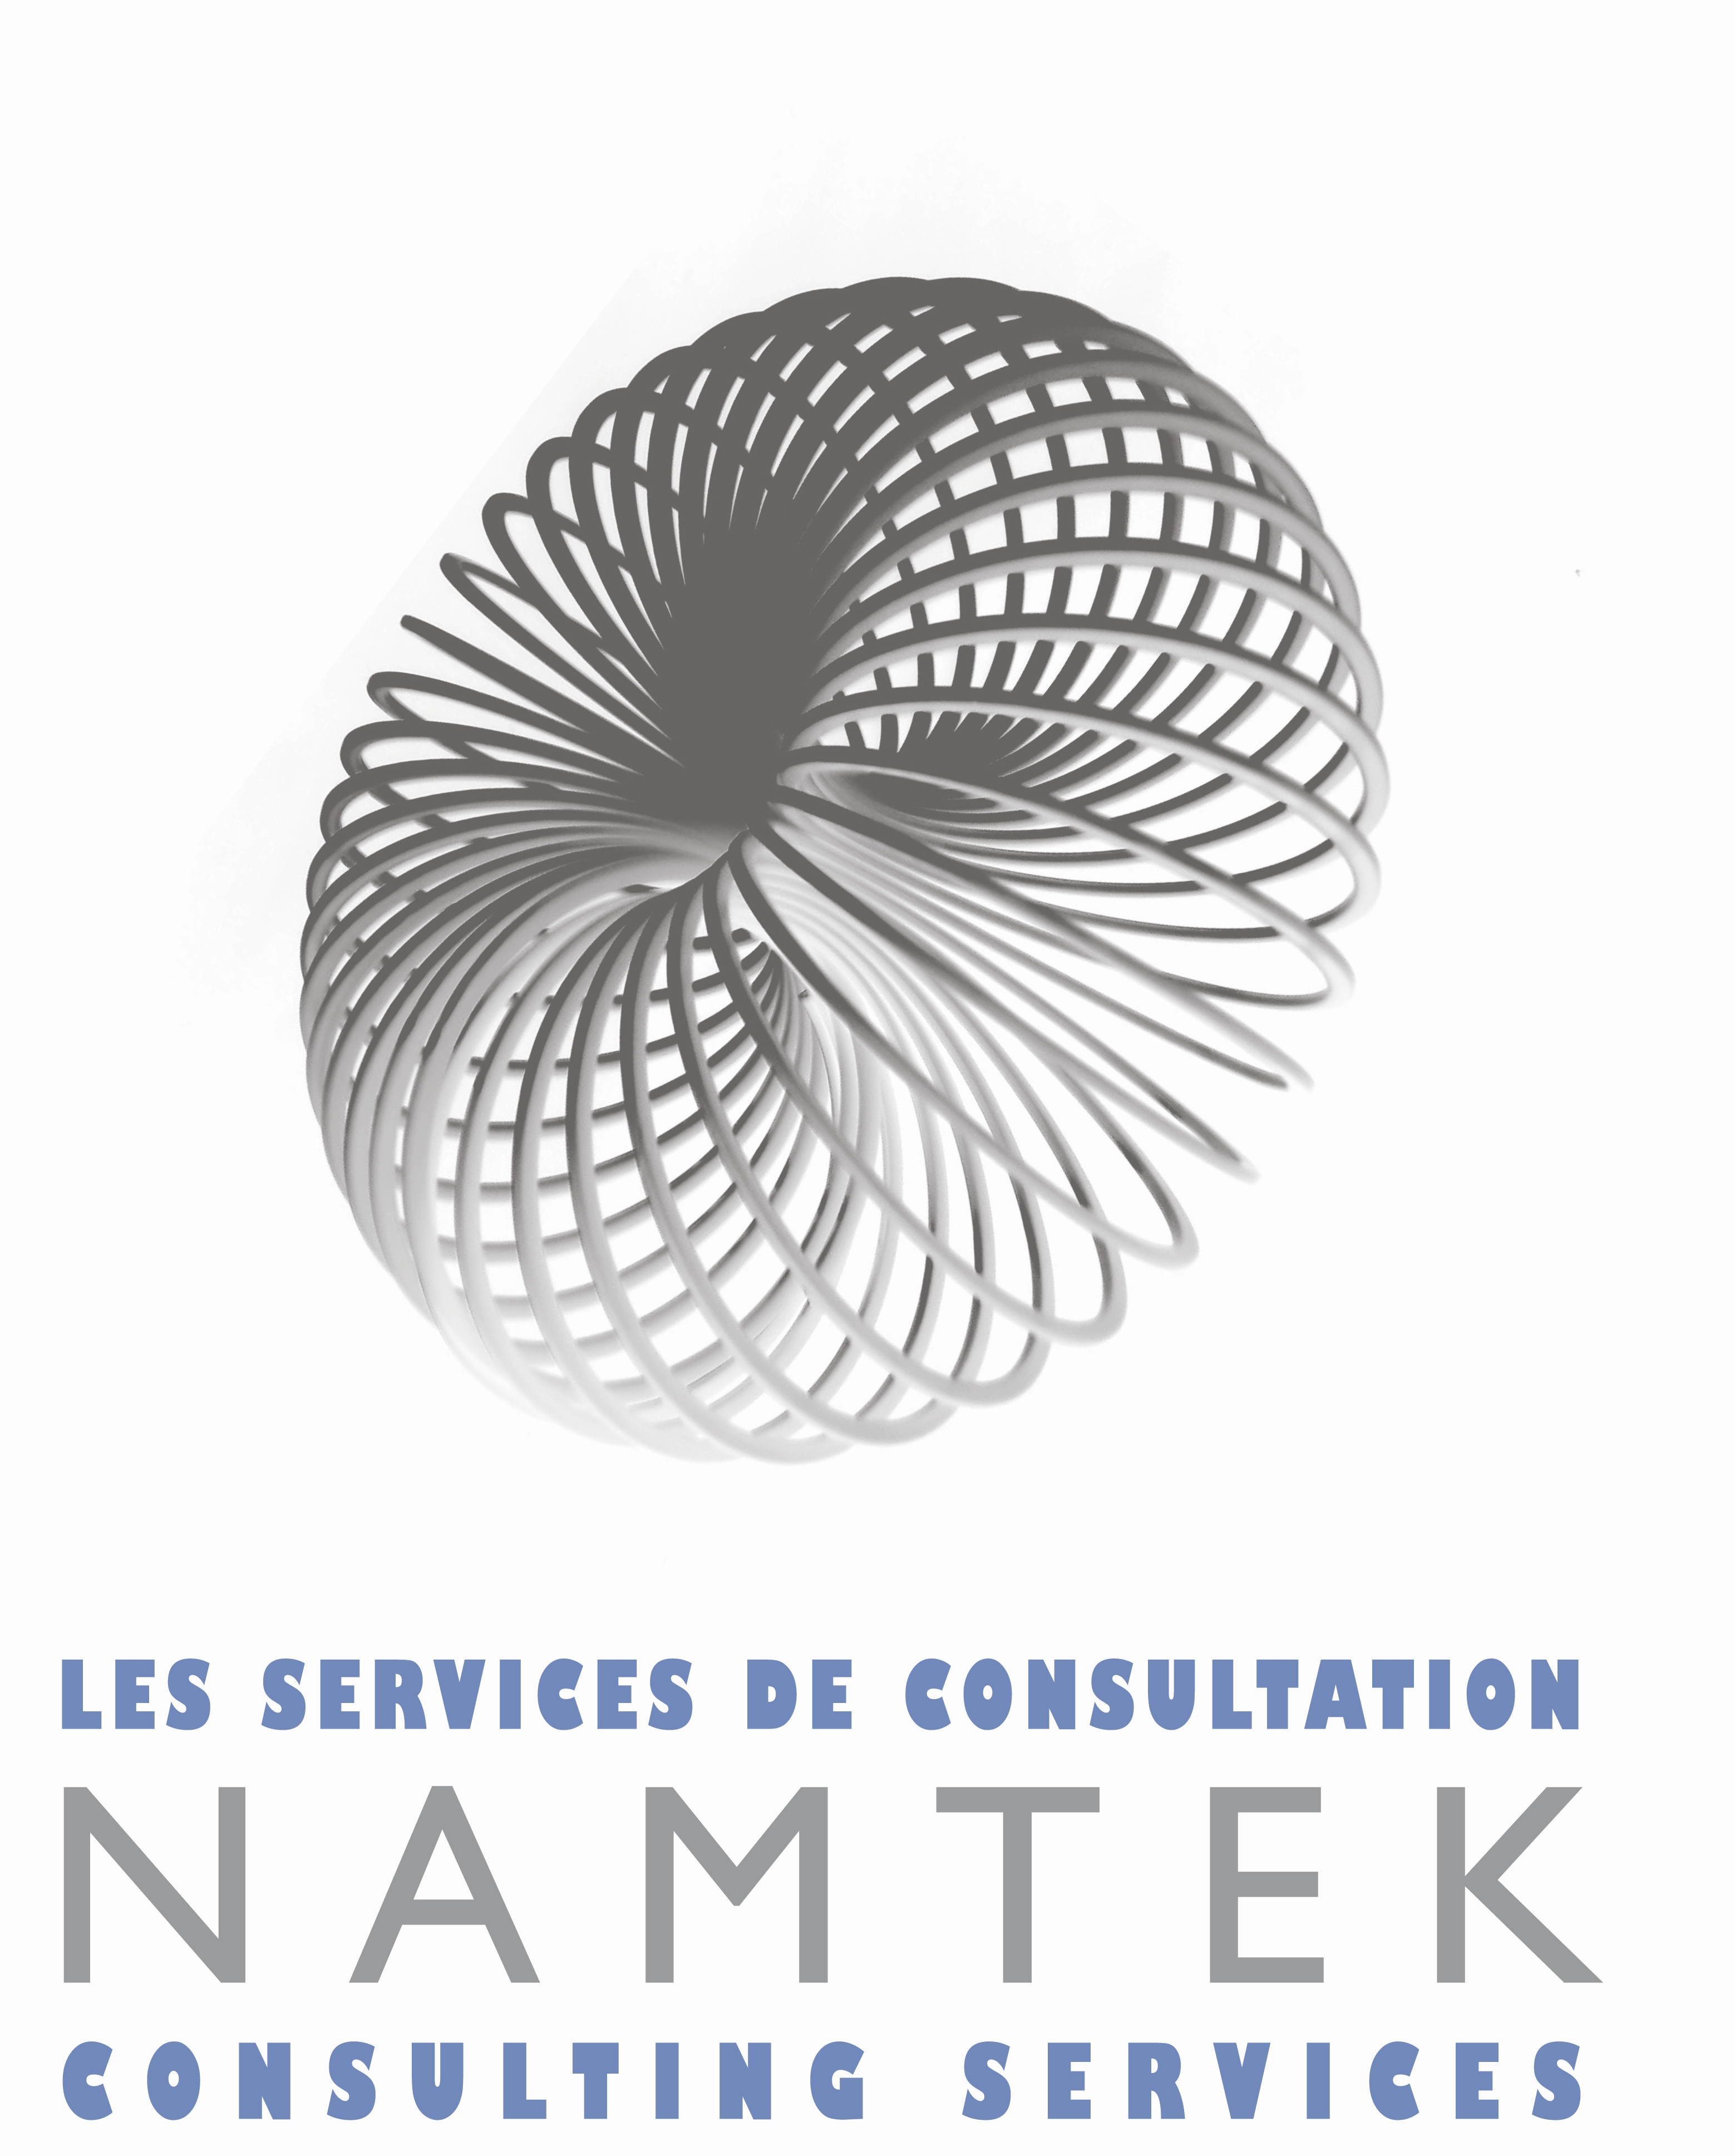 Namtek Consulting Services